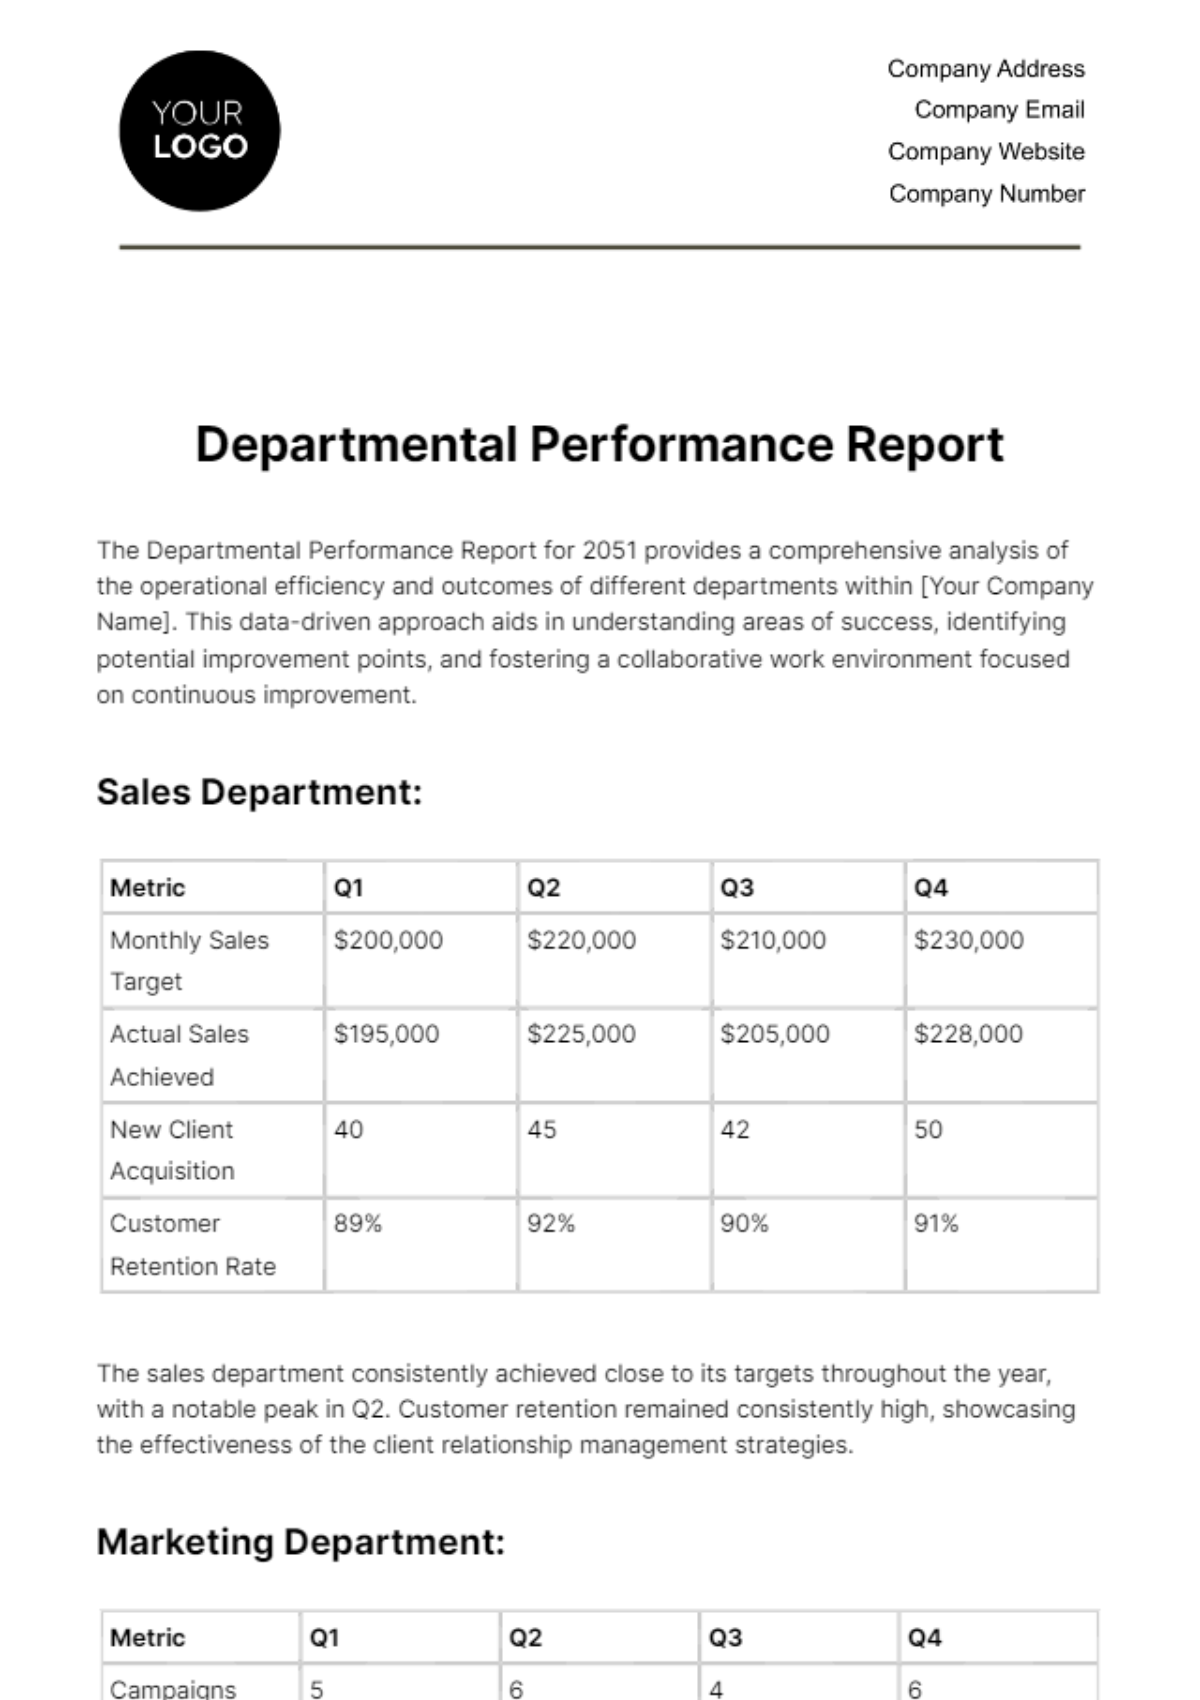 Departmental Performance Report HR Template